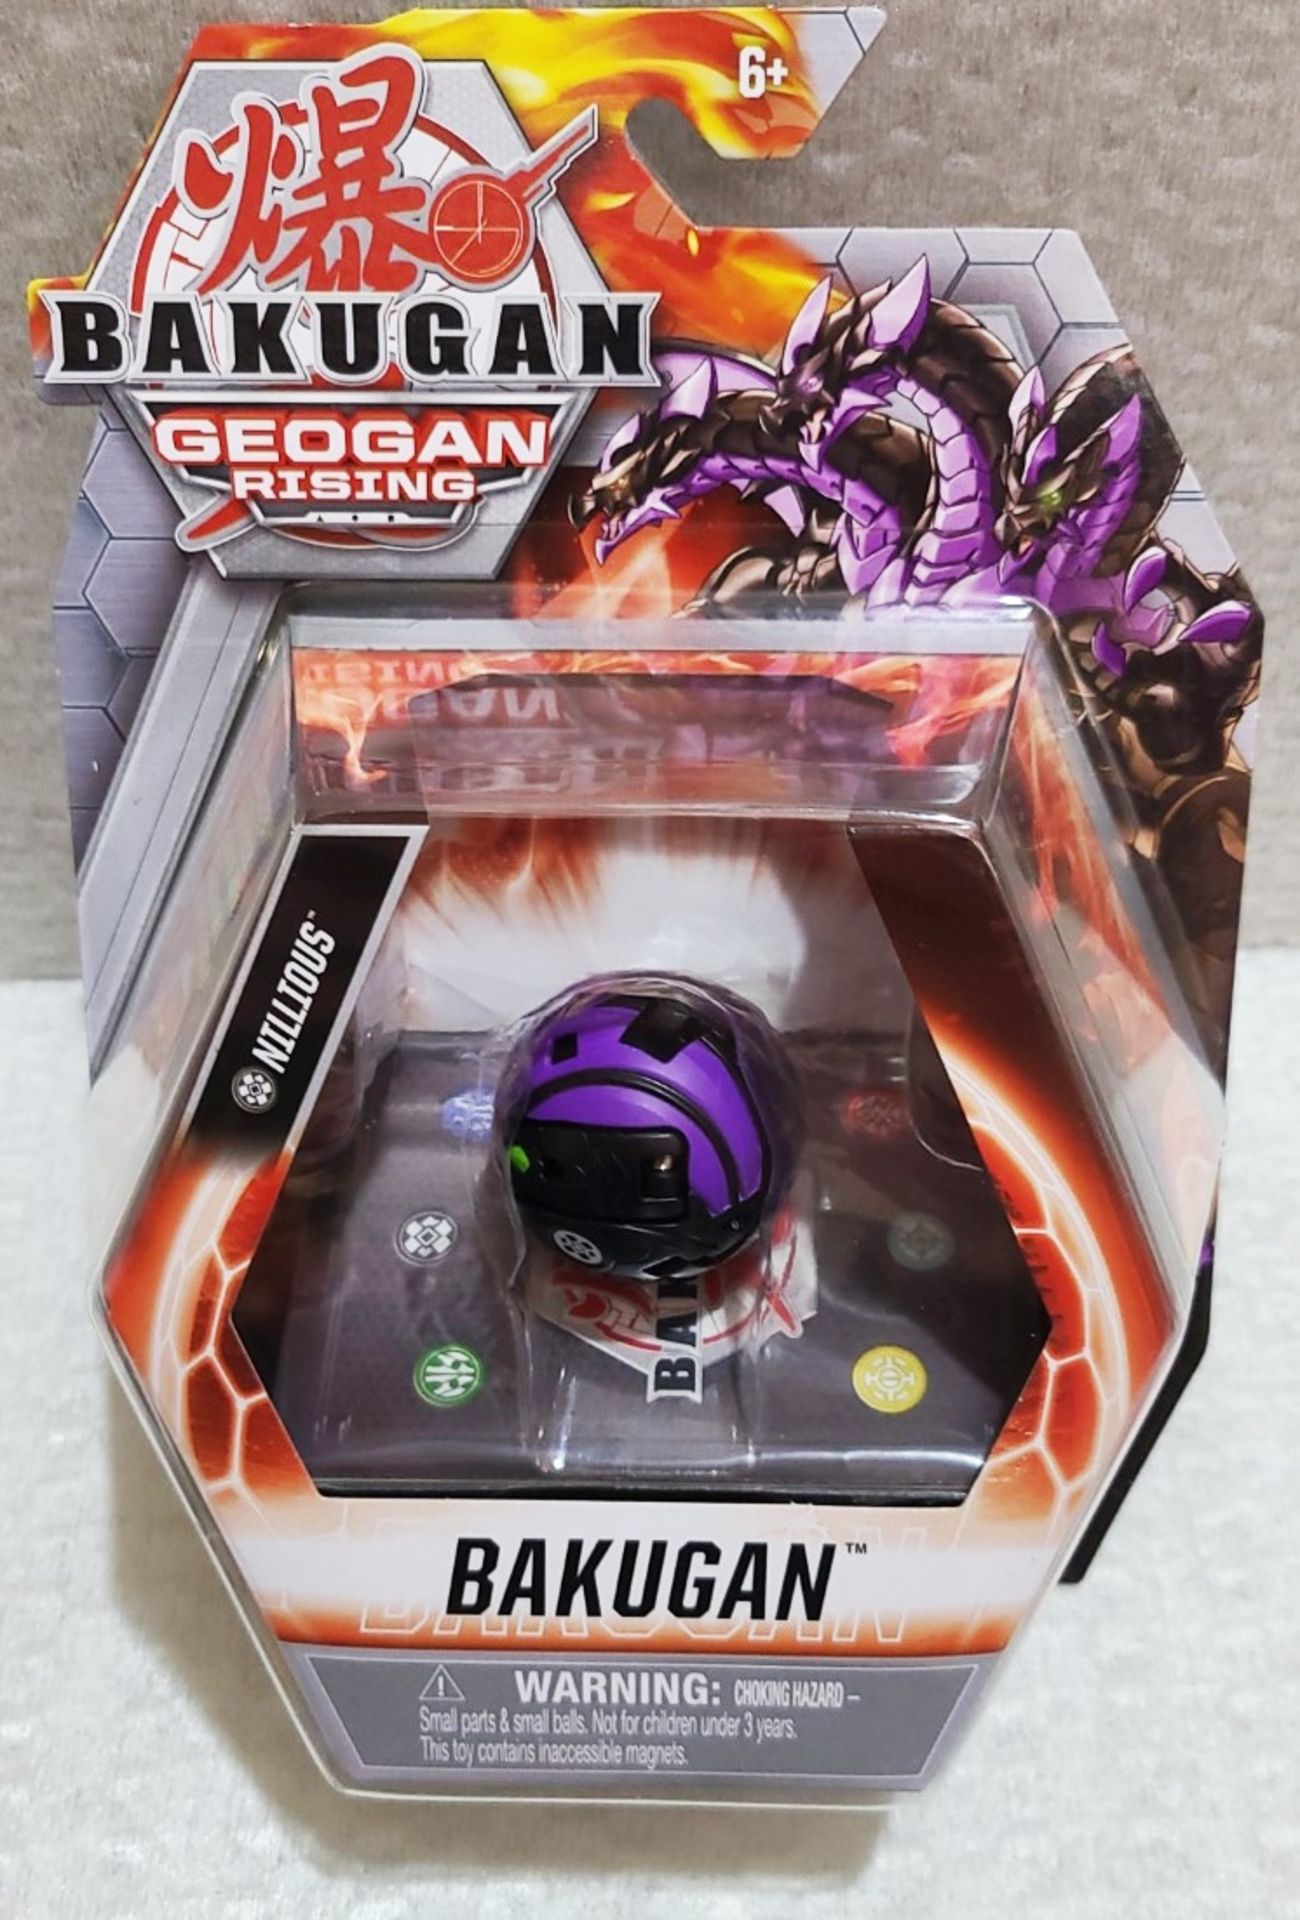 7 x BAKUGAN Bakugan Geogan Rising - Core Collectible Action Figures - Image 4 of 11